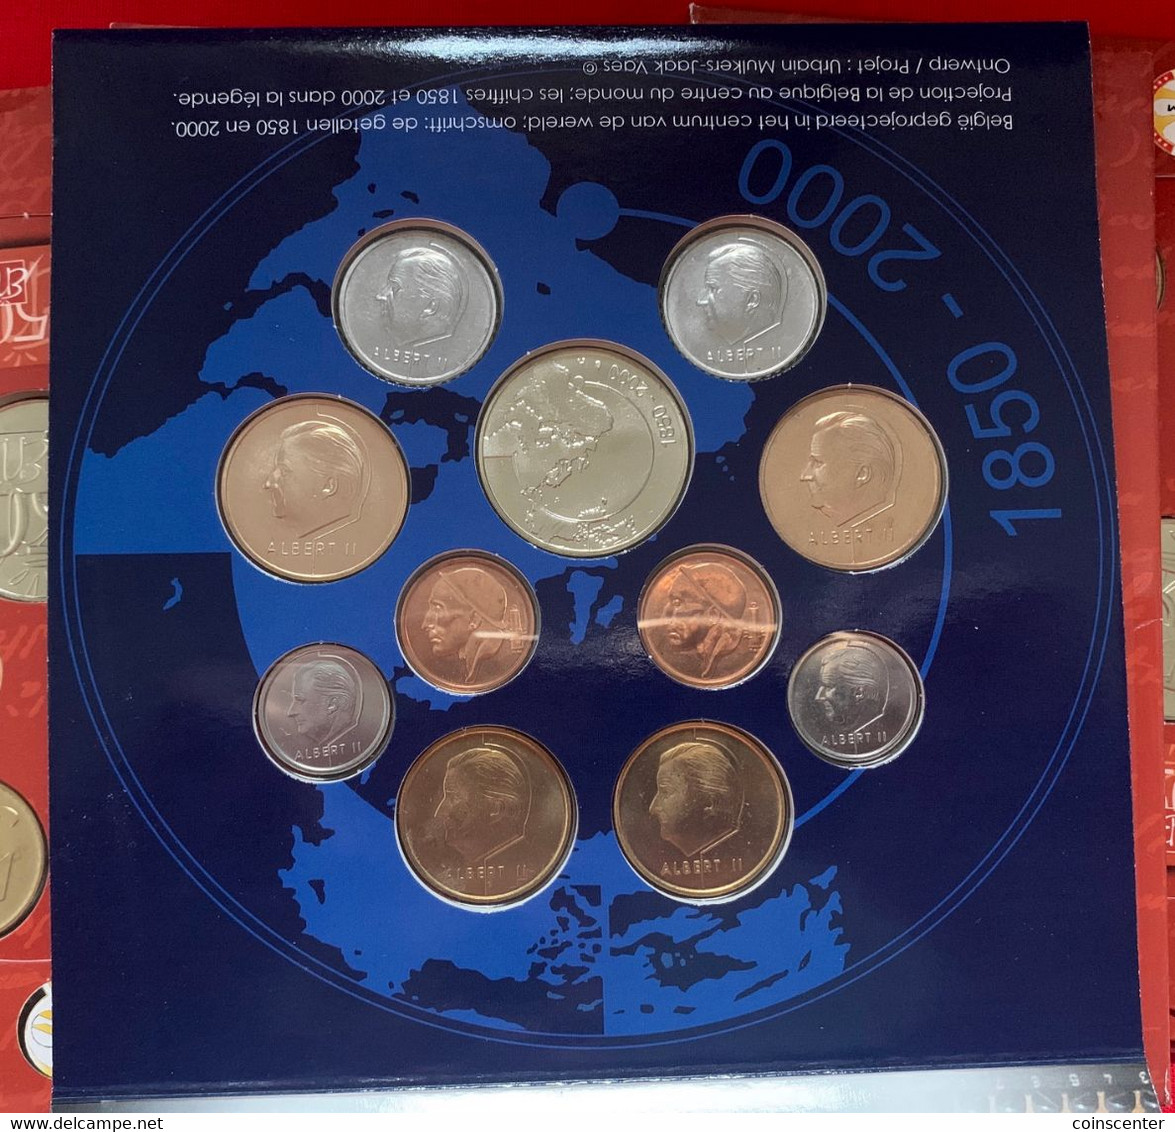 Belgium 2000 10 Coins Mint Set (+ Token) "Belgian Bank" BU - FDC, BU, Proofs & Presentation Cases